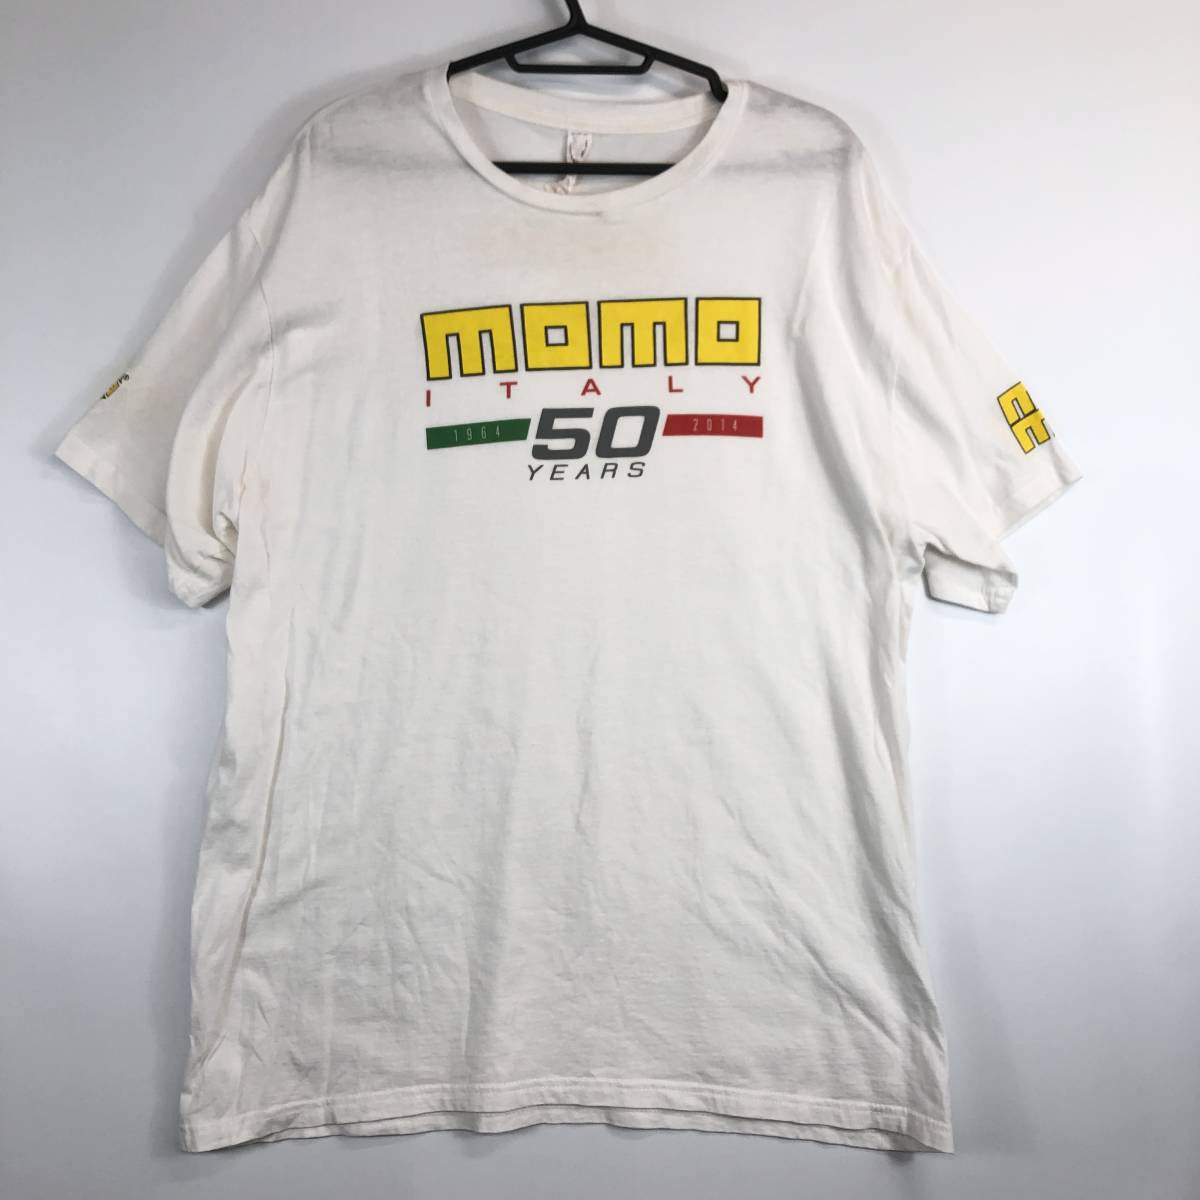 momo ITALY 50周年記念Tシャツ ホワイト Lサイズ 半袖 1964-2014 モモ社